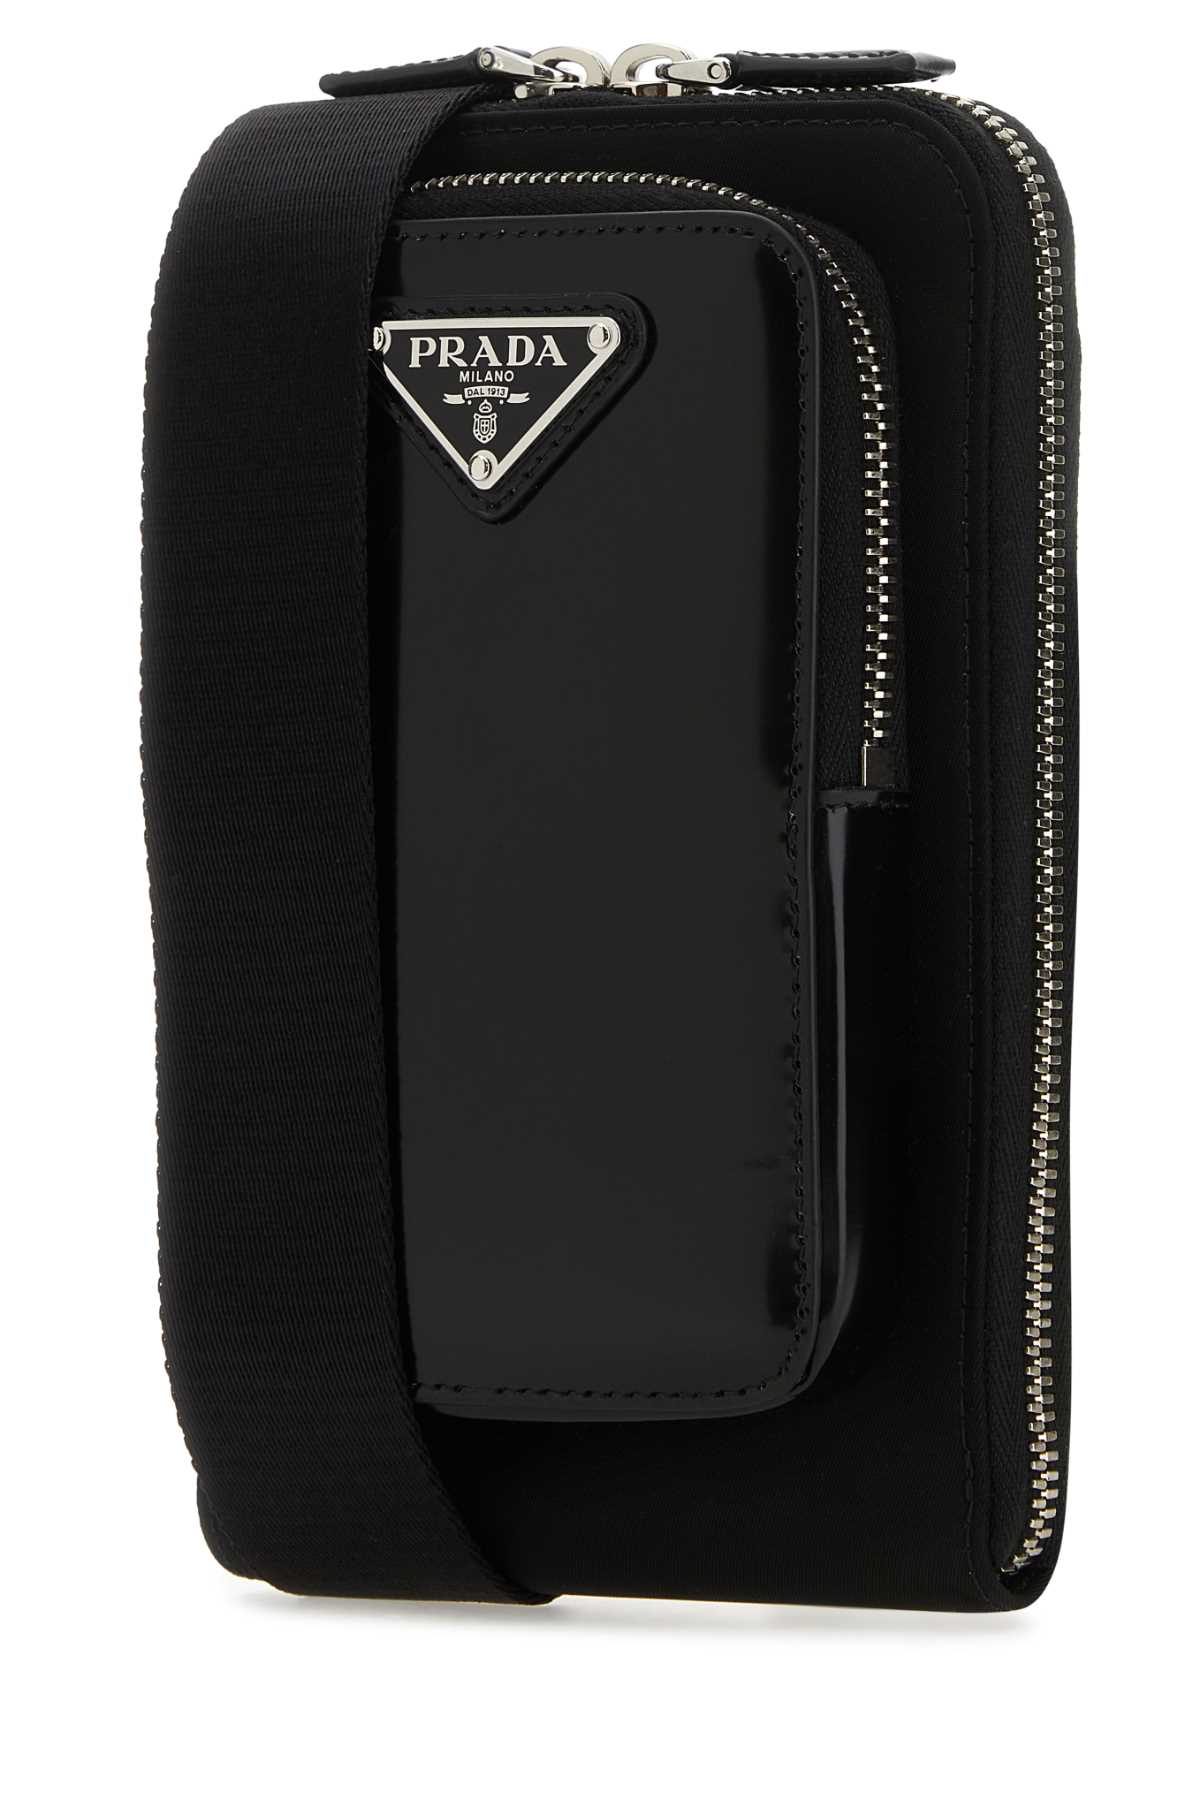 Prada Black Nylon And Leather Phone Case In Nero